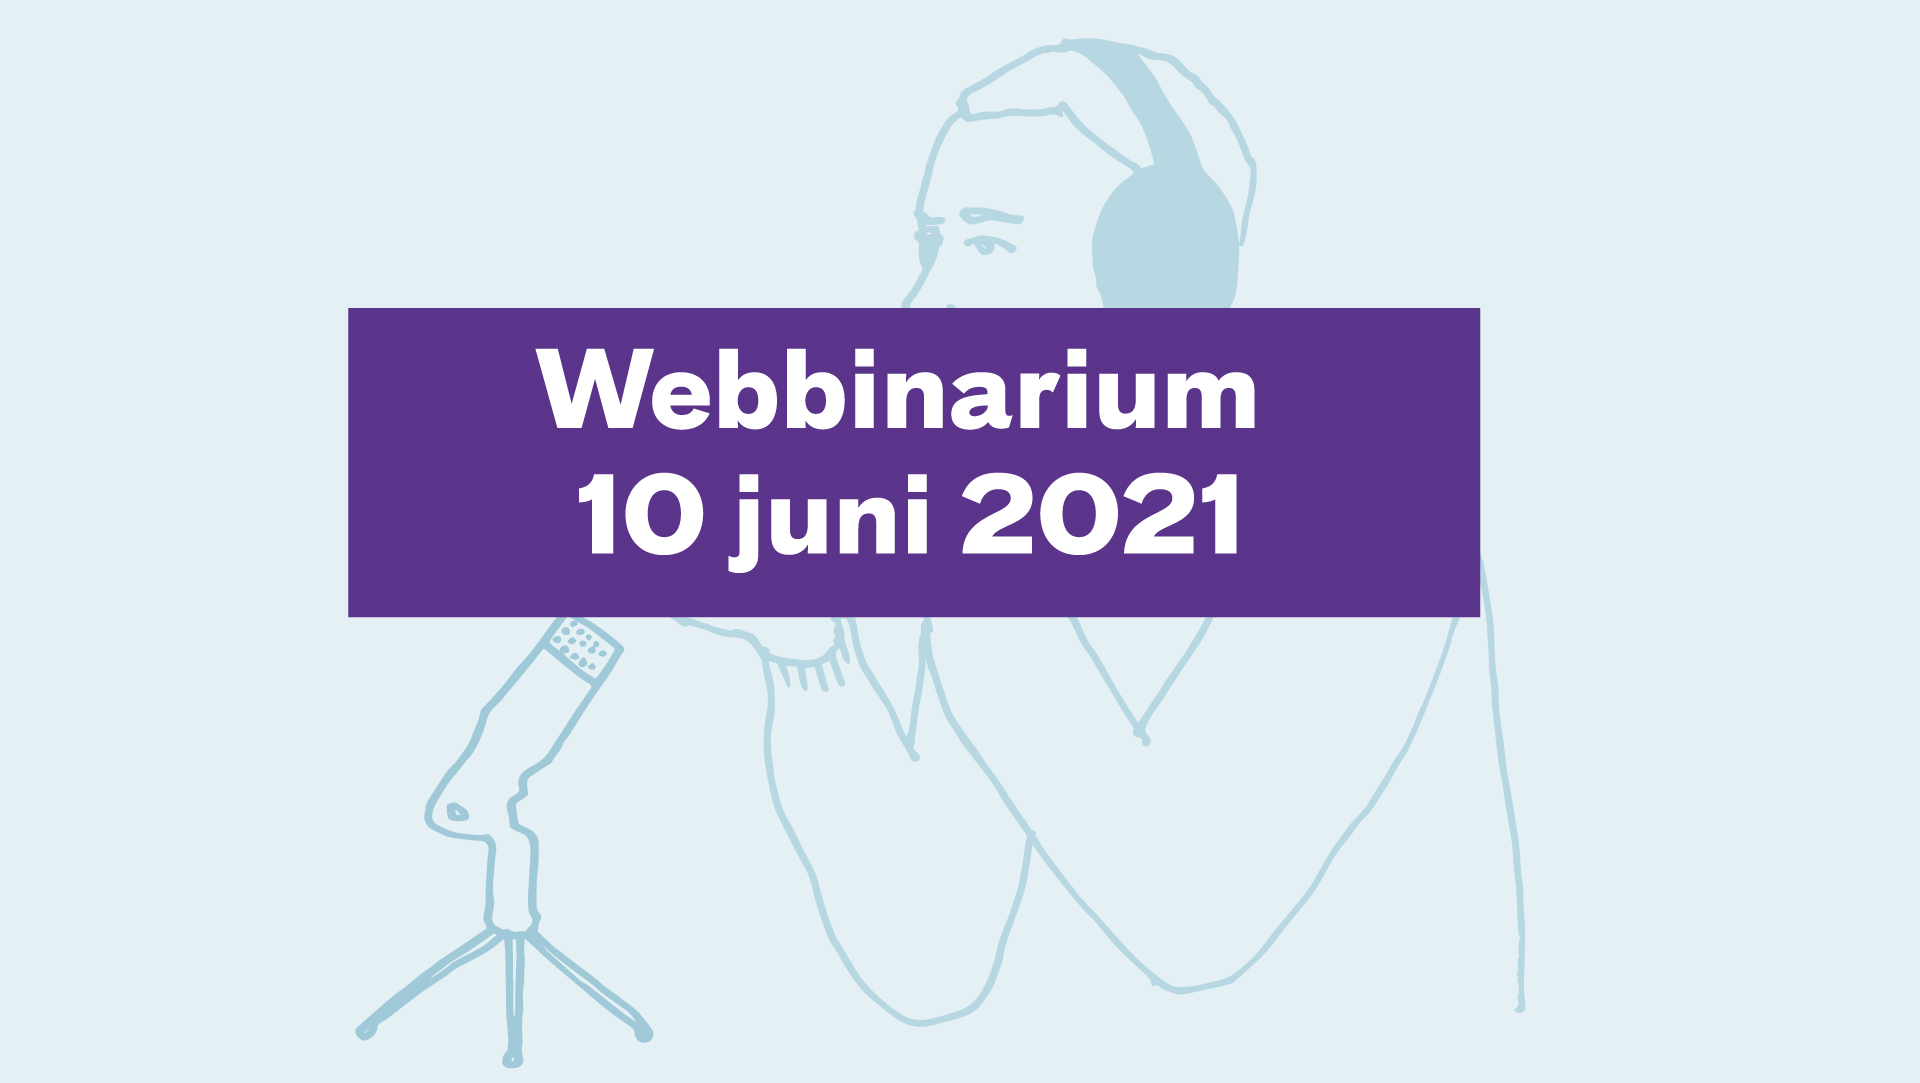 Webbinarium 10 juni 2021